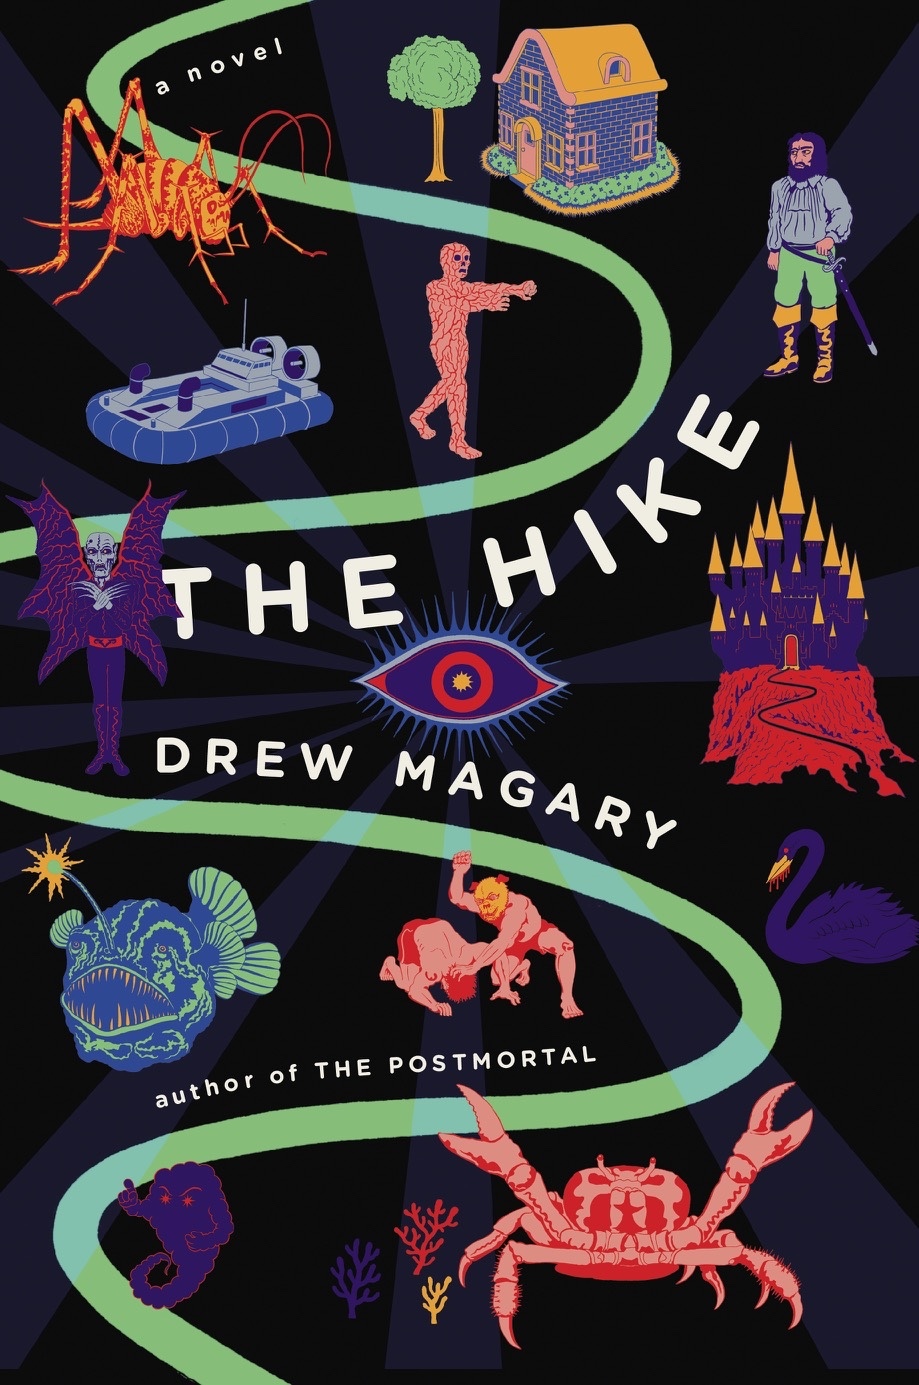 Drew Magary: The hike (2016)